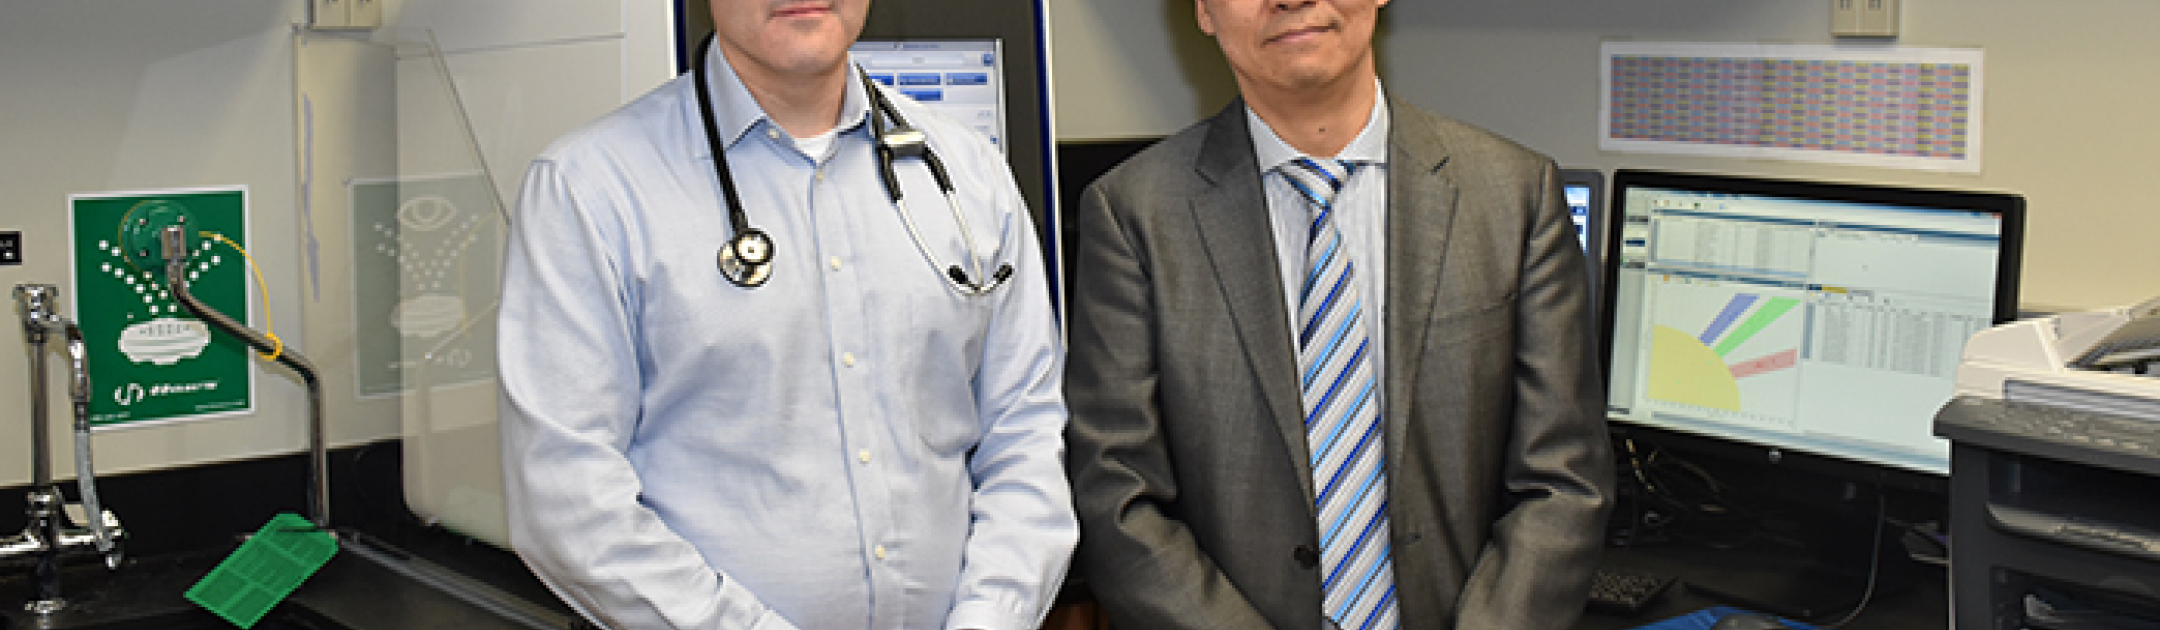 Dr. John Lenehan and Dr. Richard Kim